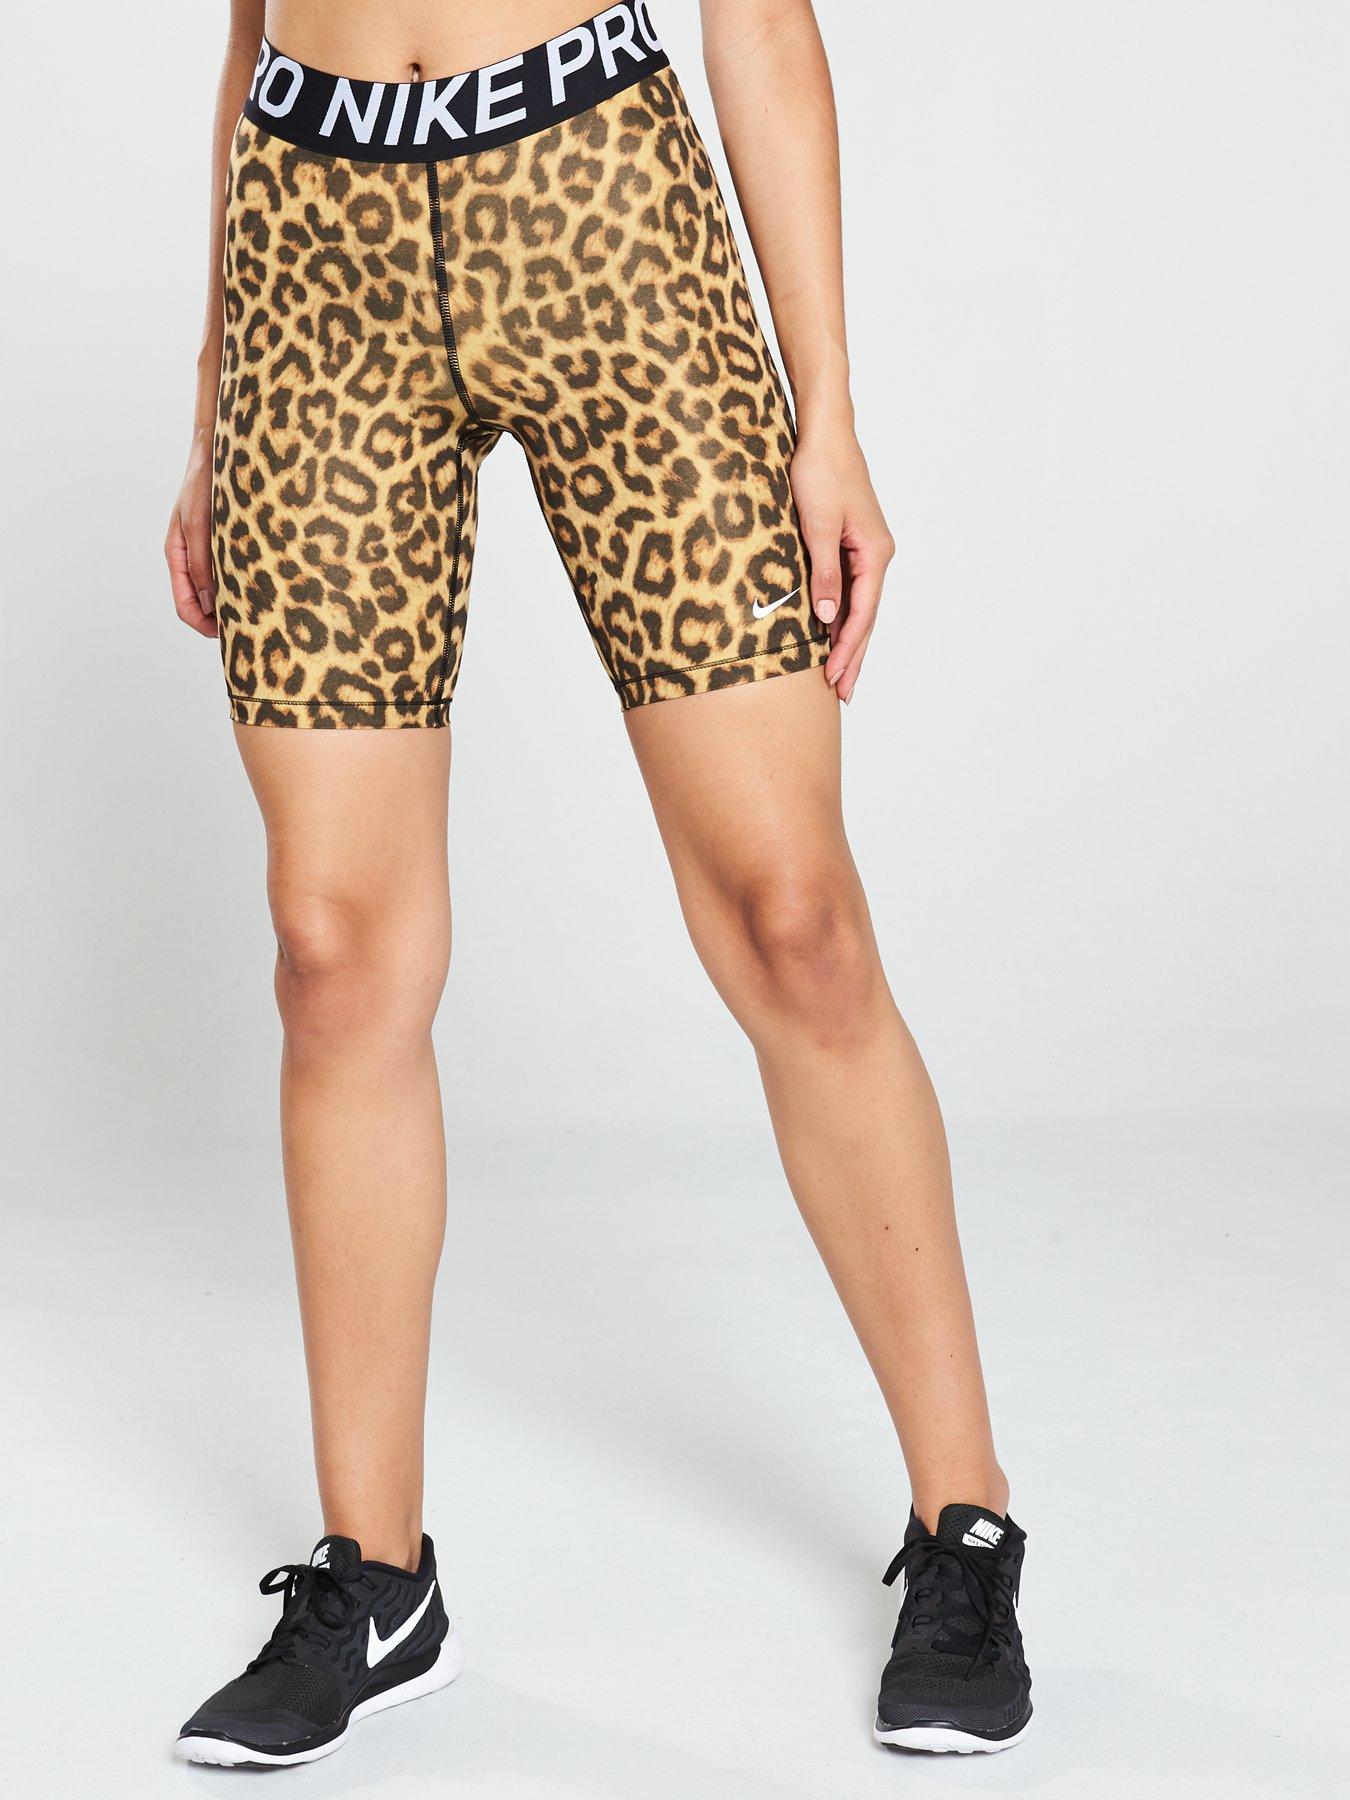 nike pro leopard shorts